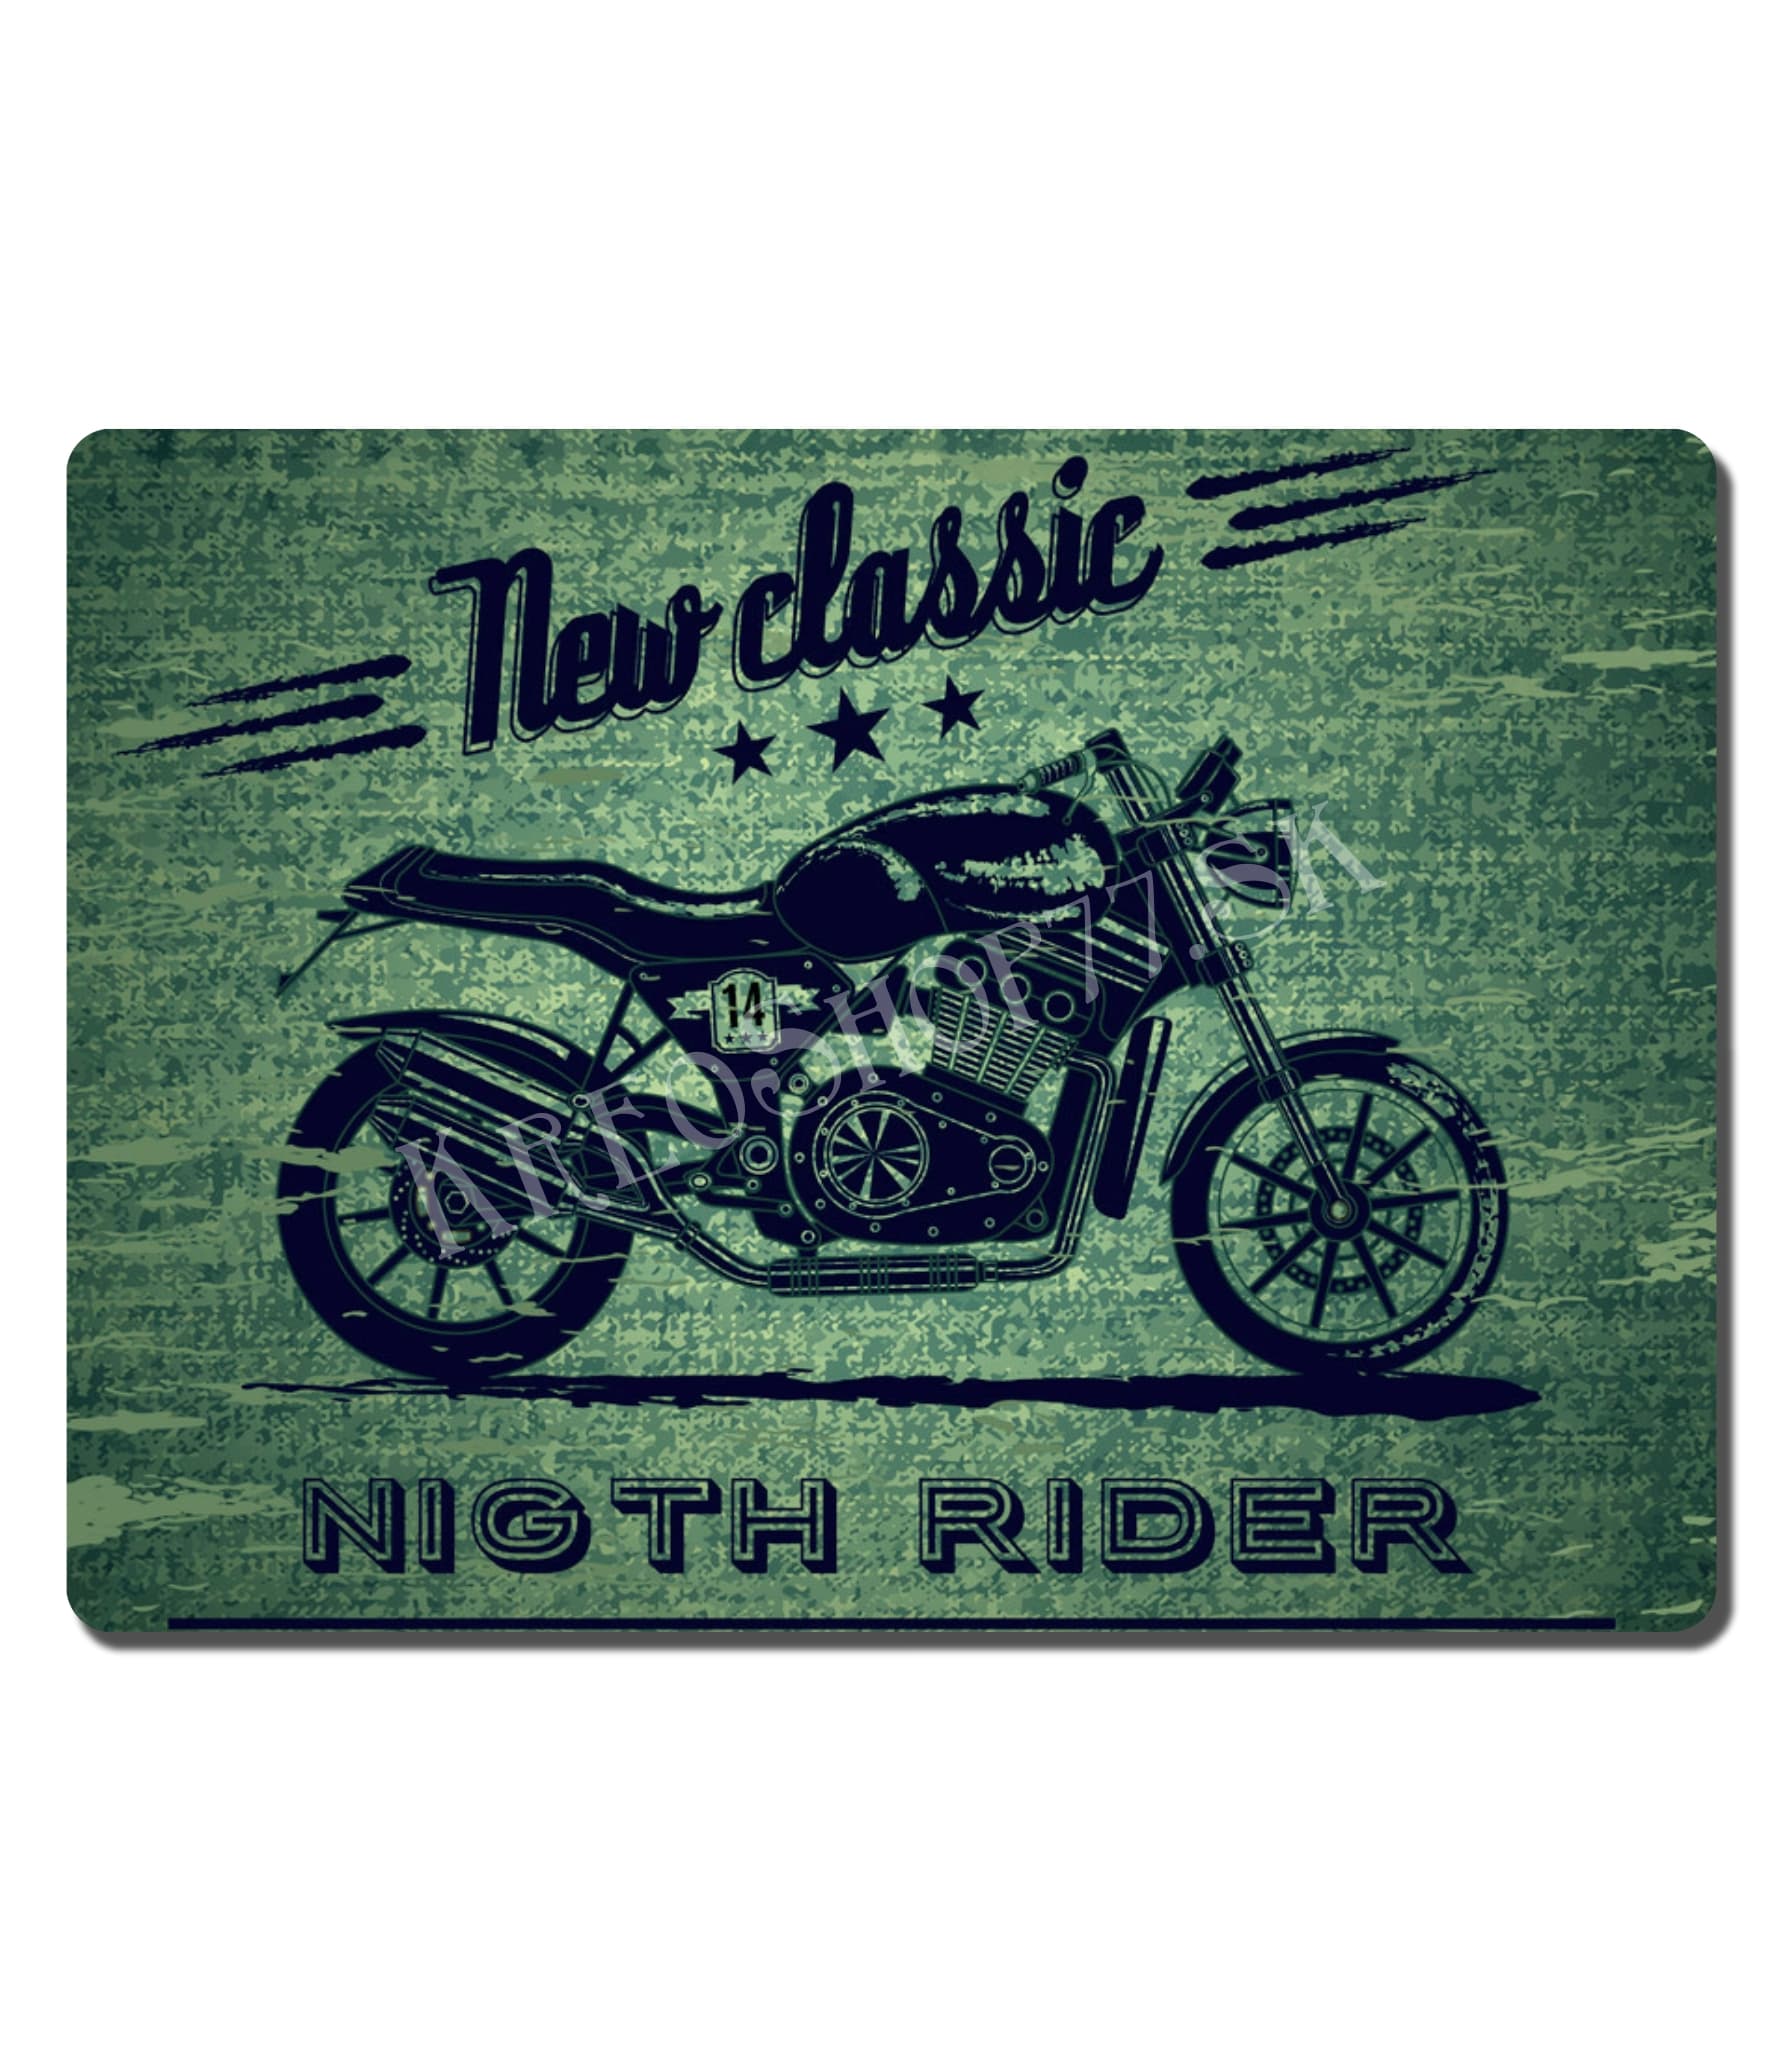 Retro Poster Motorcycle 010